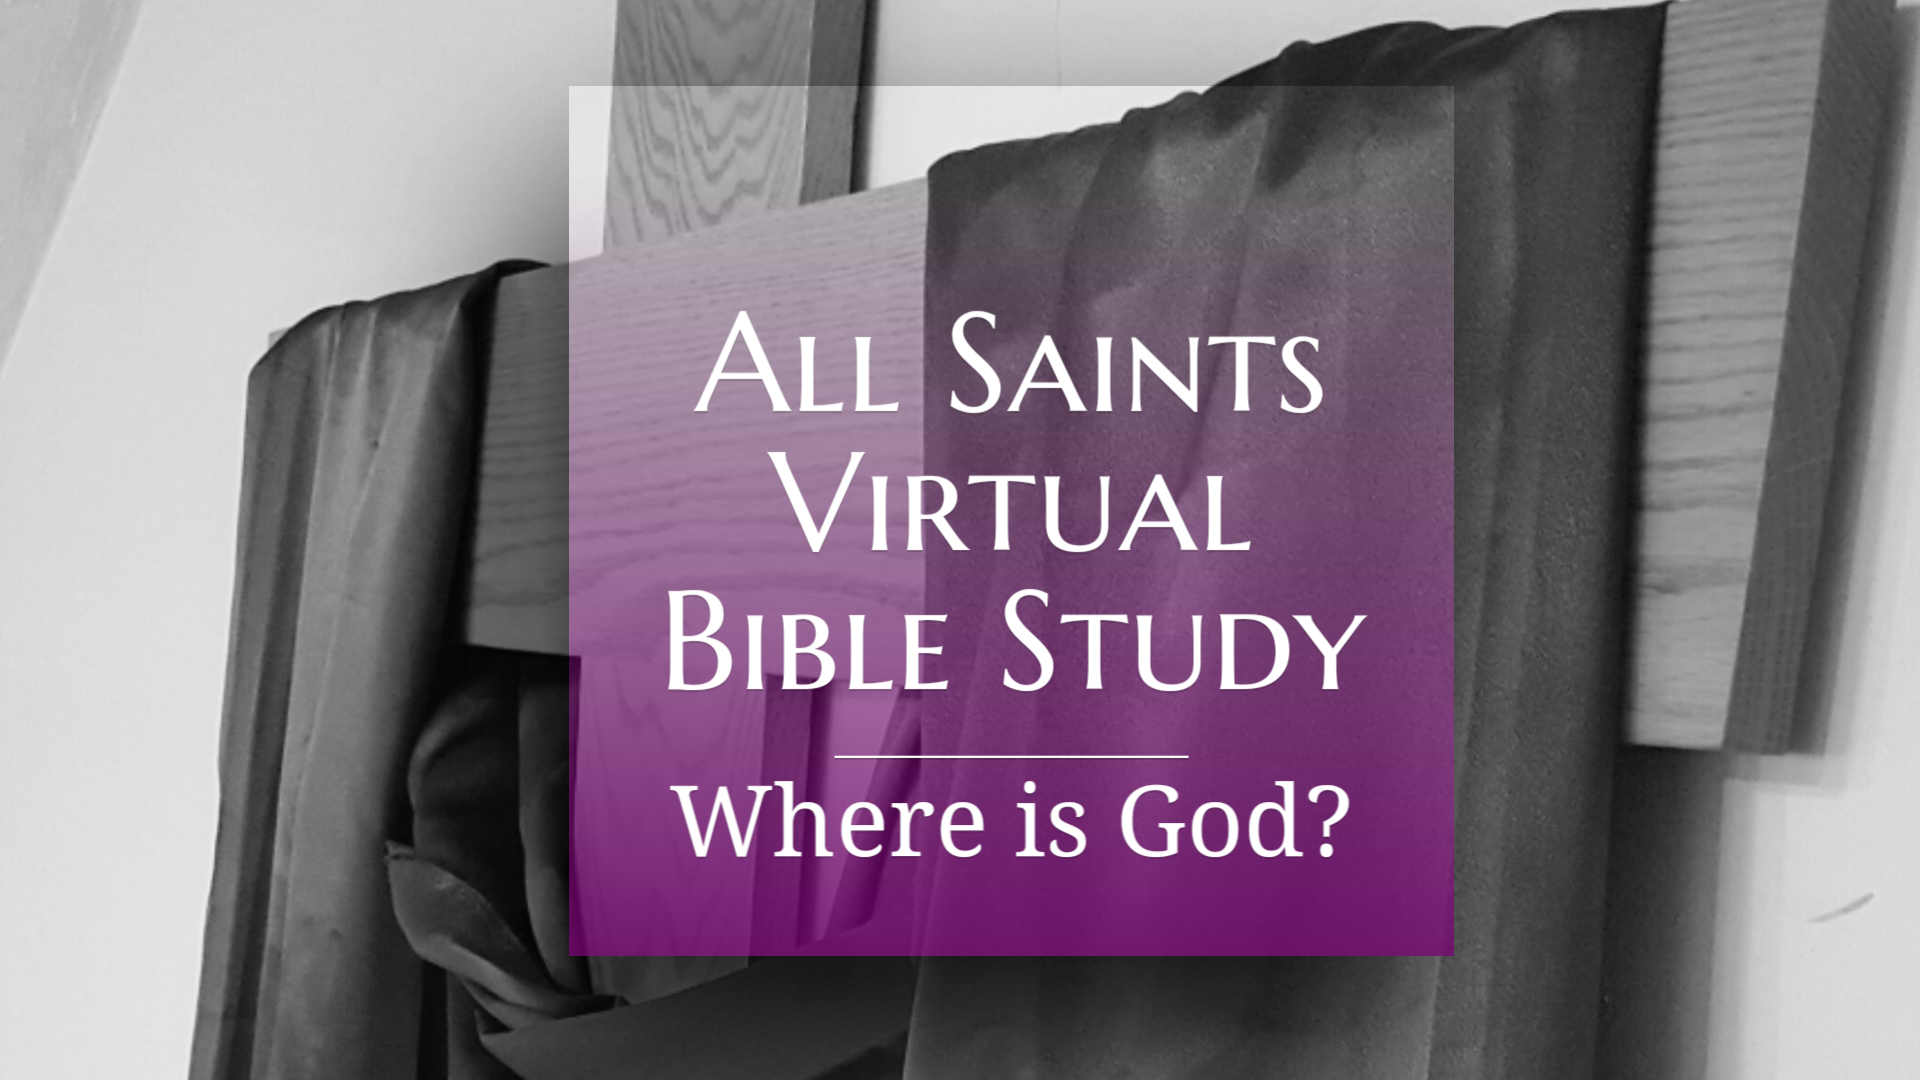 All Saints Virtual Bible Study - Where is God?